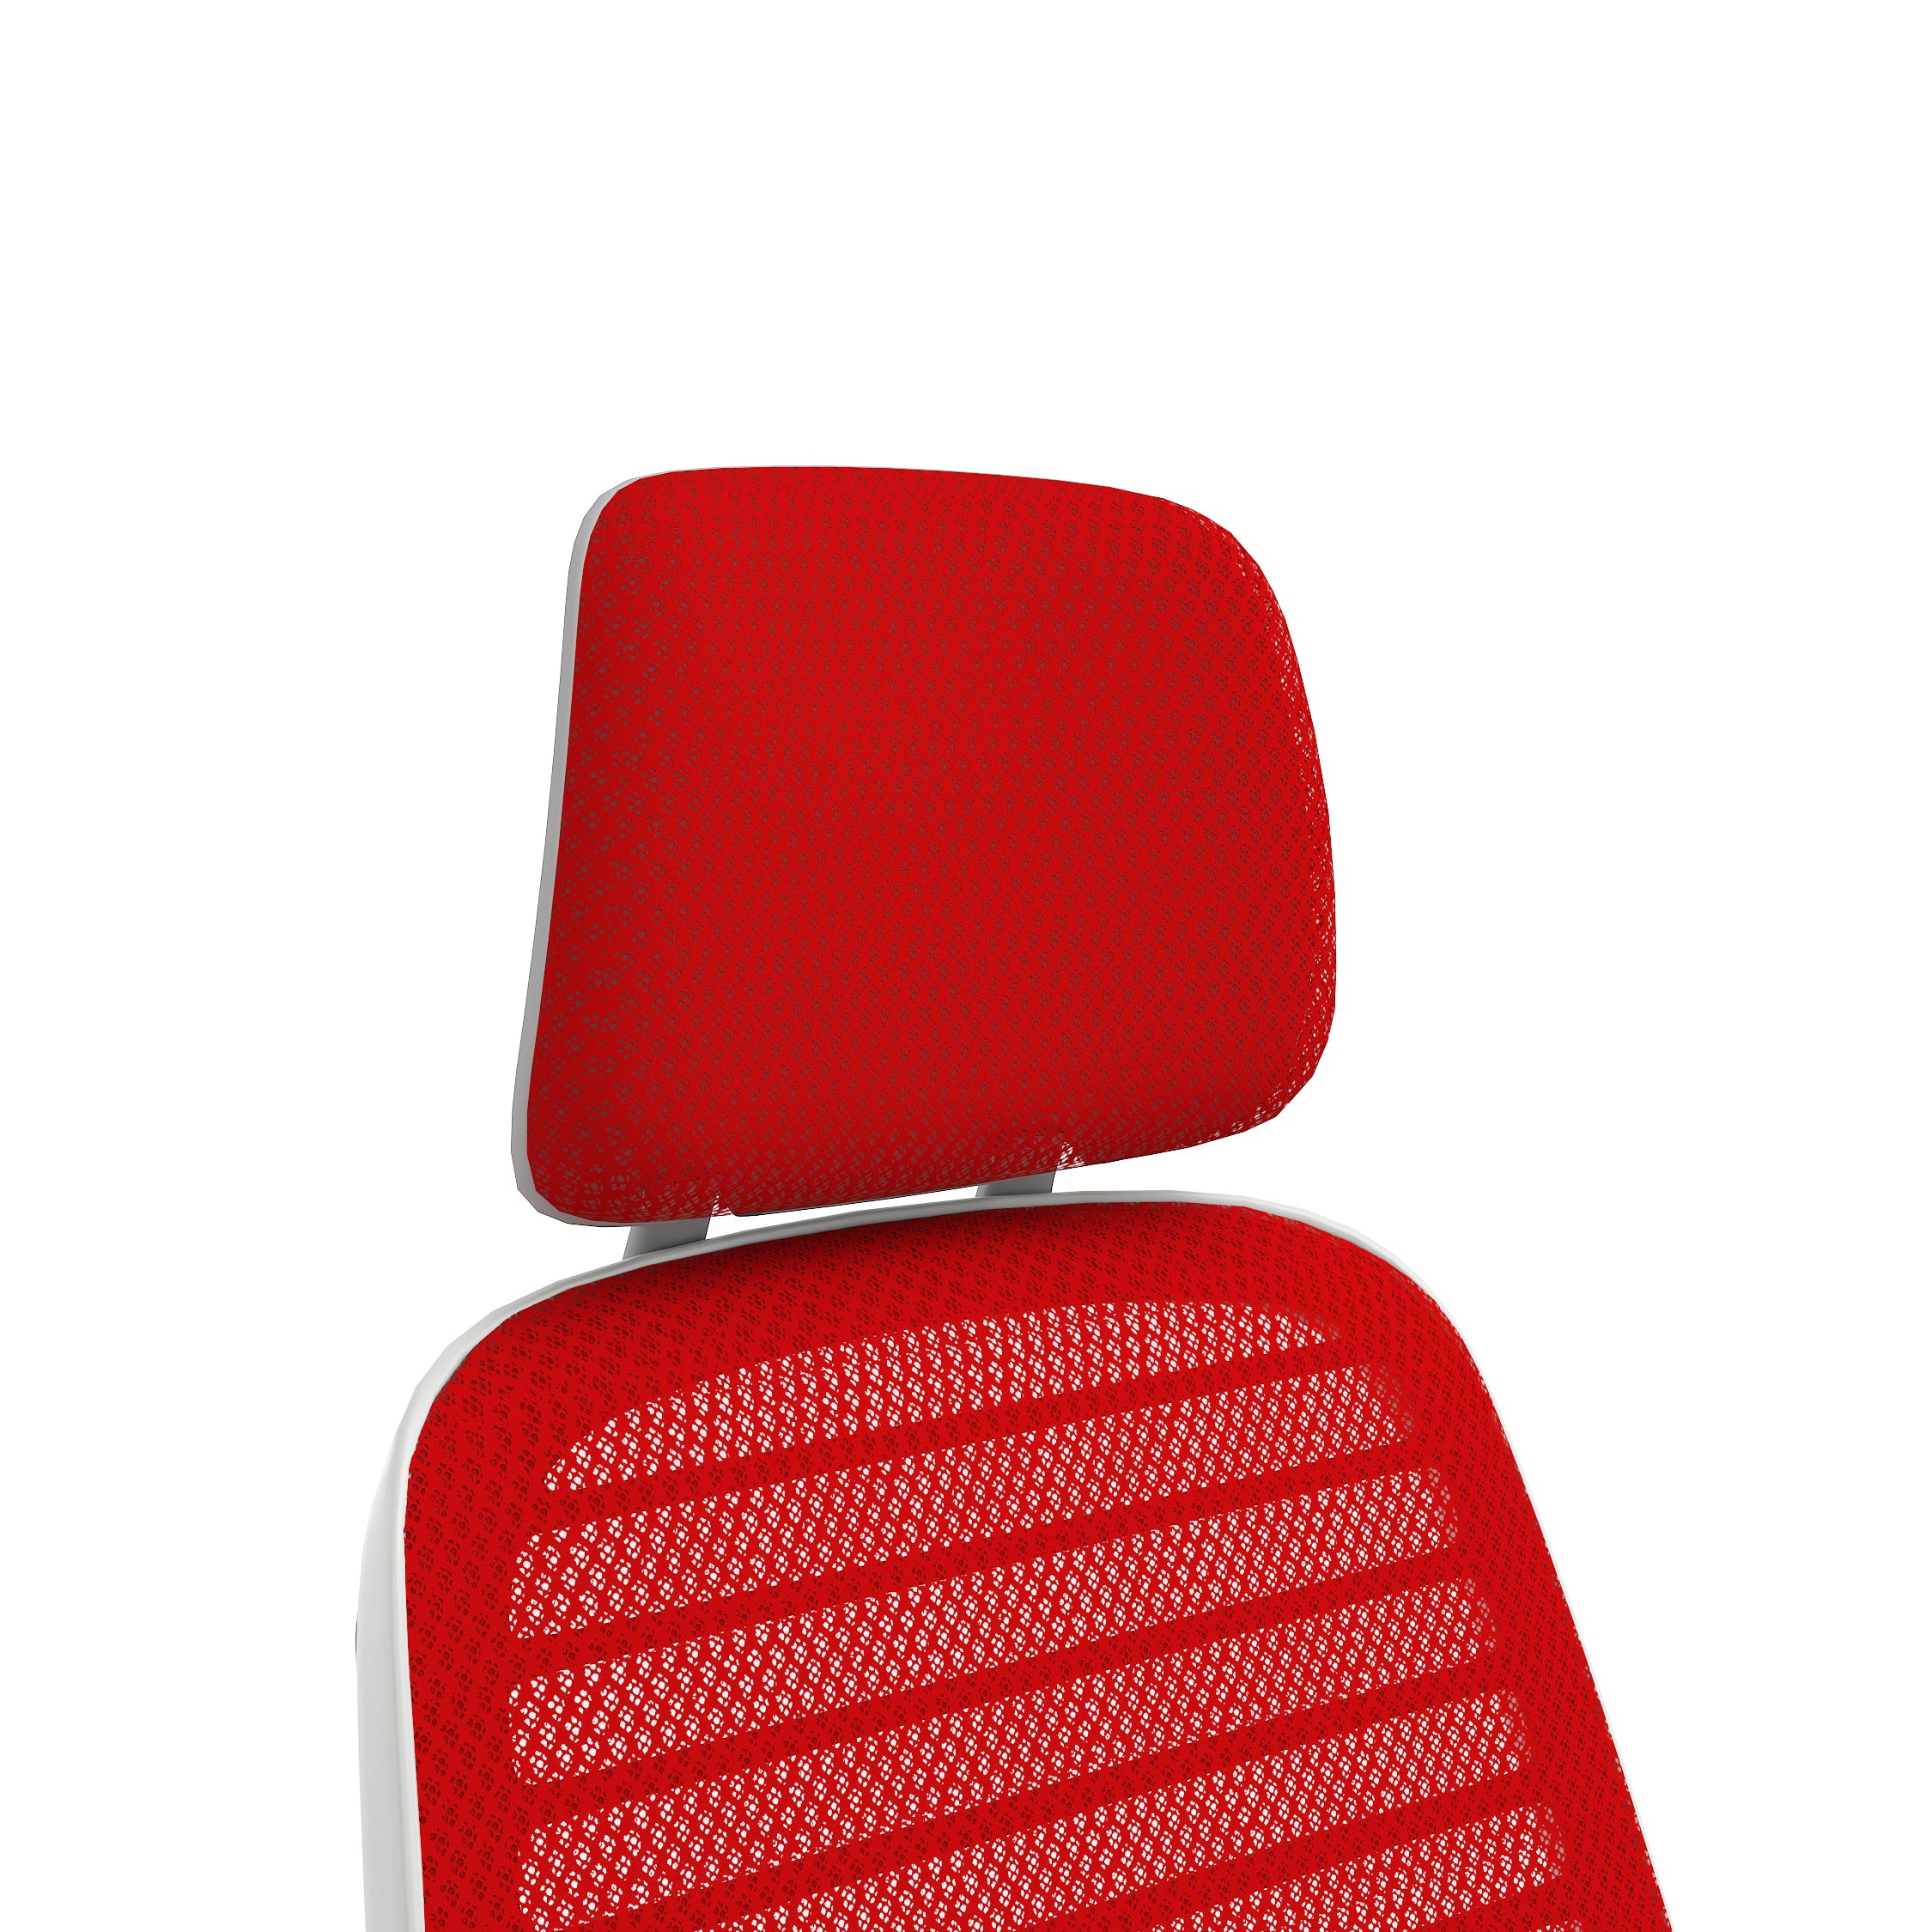 Meshback 3D Microknit Scarlet; Seat Fabric Cogent Scarlet; Frame Seagull